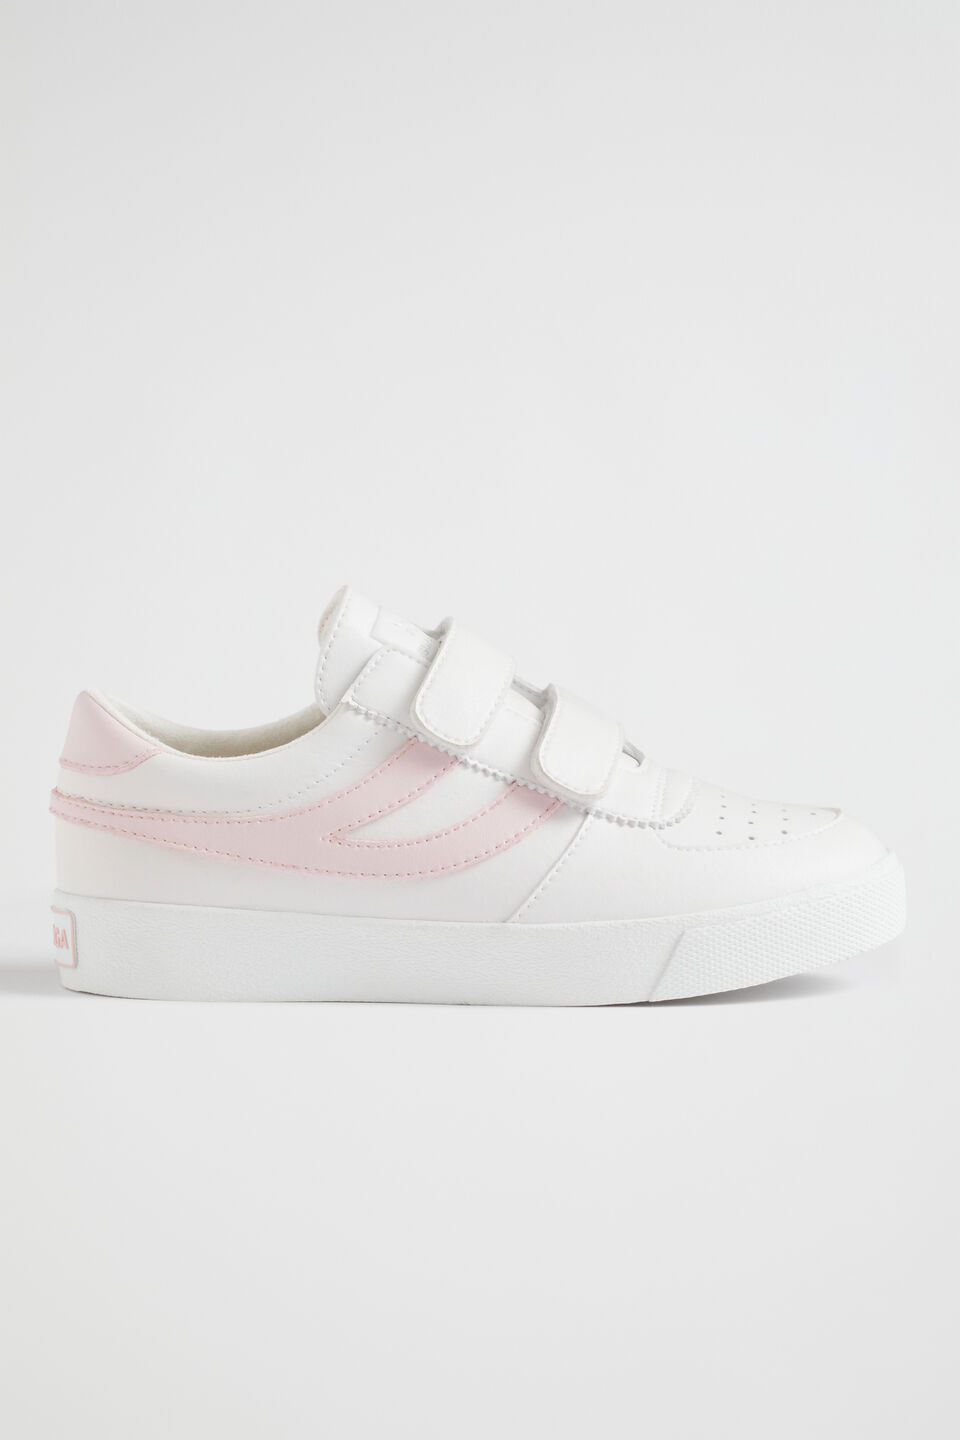 Superga Seattle Strap Sneaker  White Pink